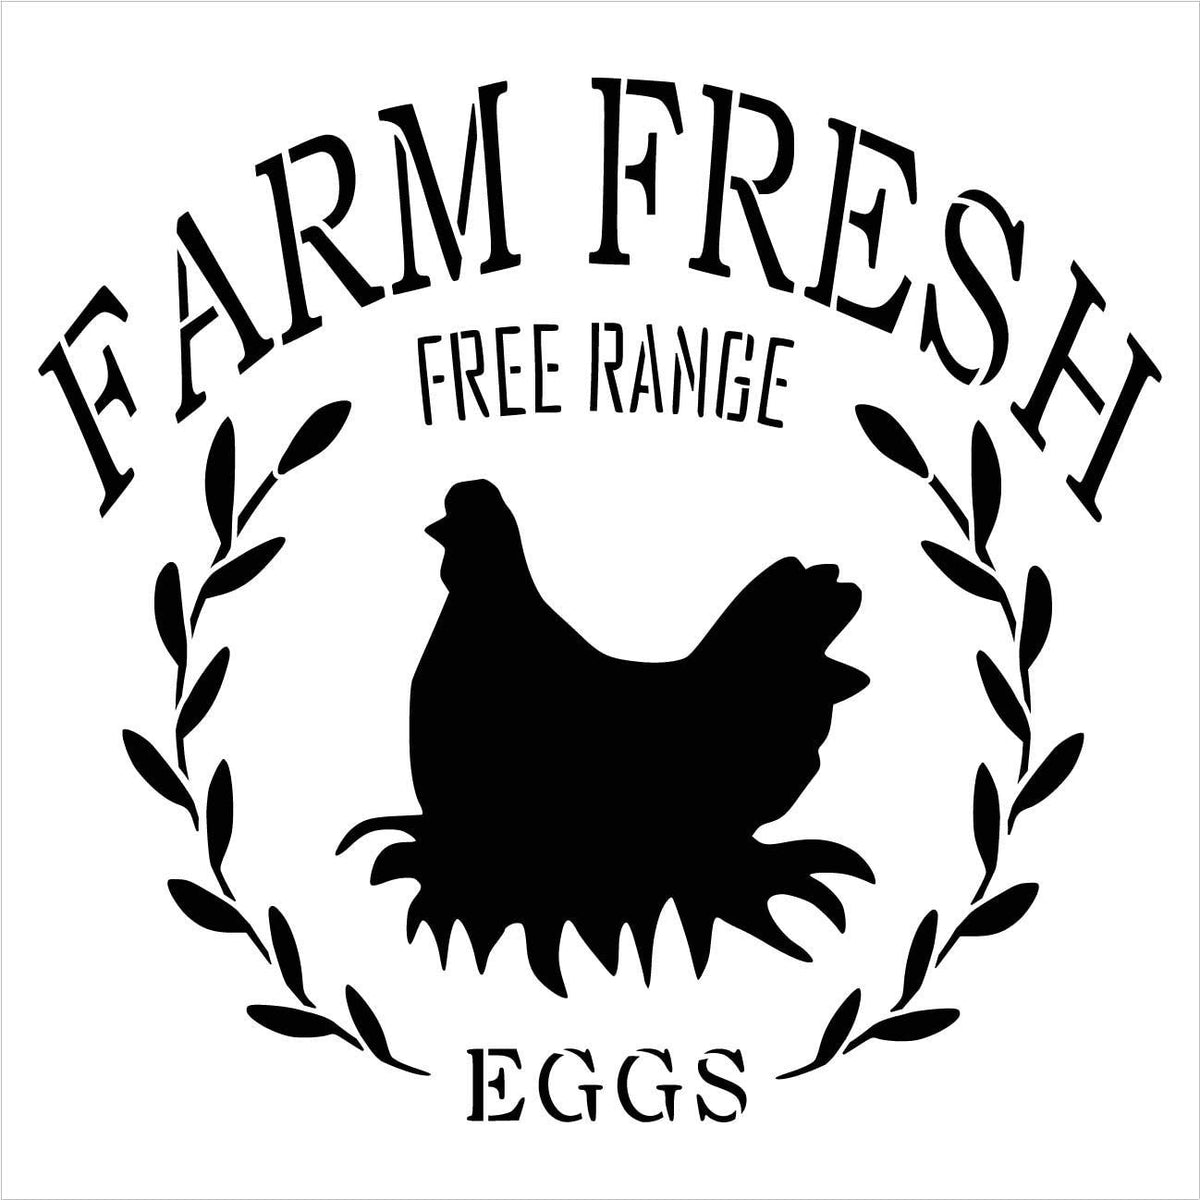 Farm Fresh Free Range Eggs Stencil By StudioR12 DIY Chicken Laurel W StudioR12 Stencils